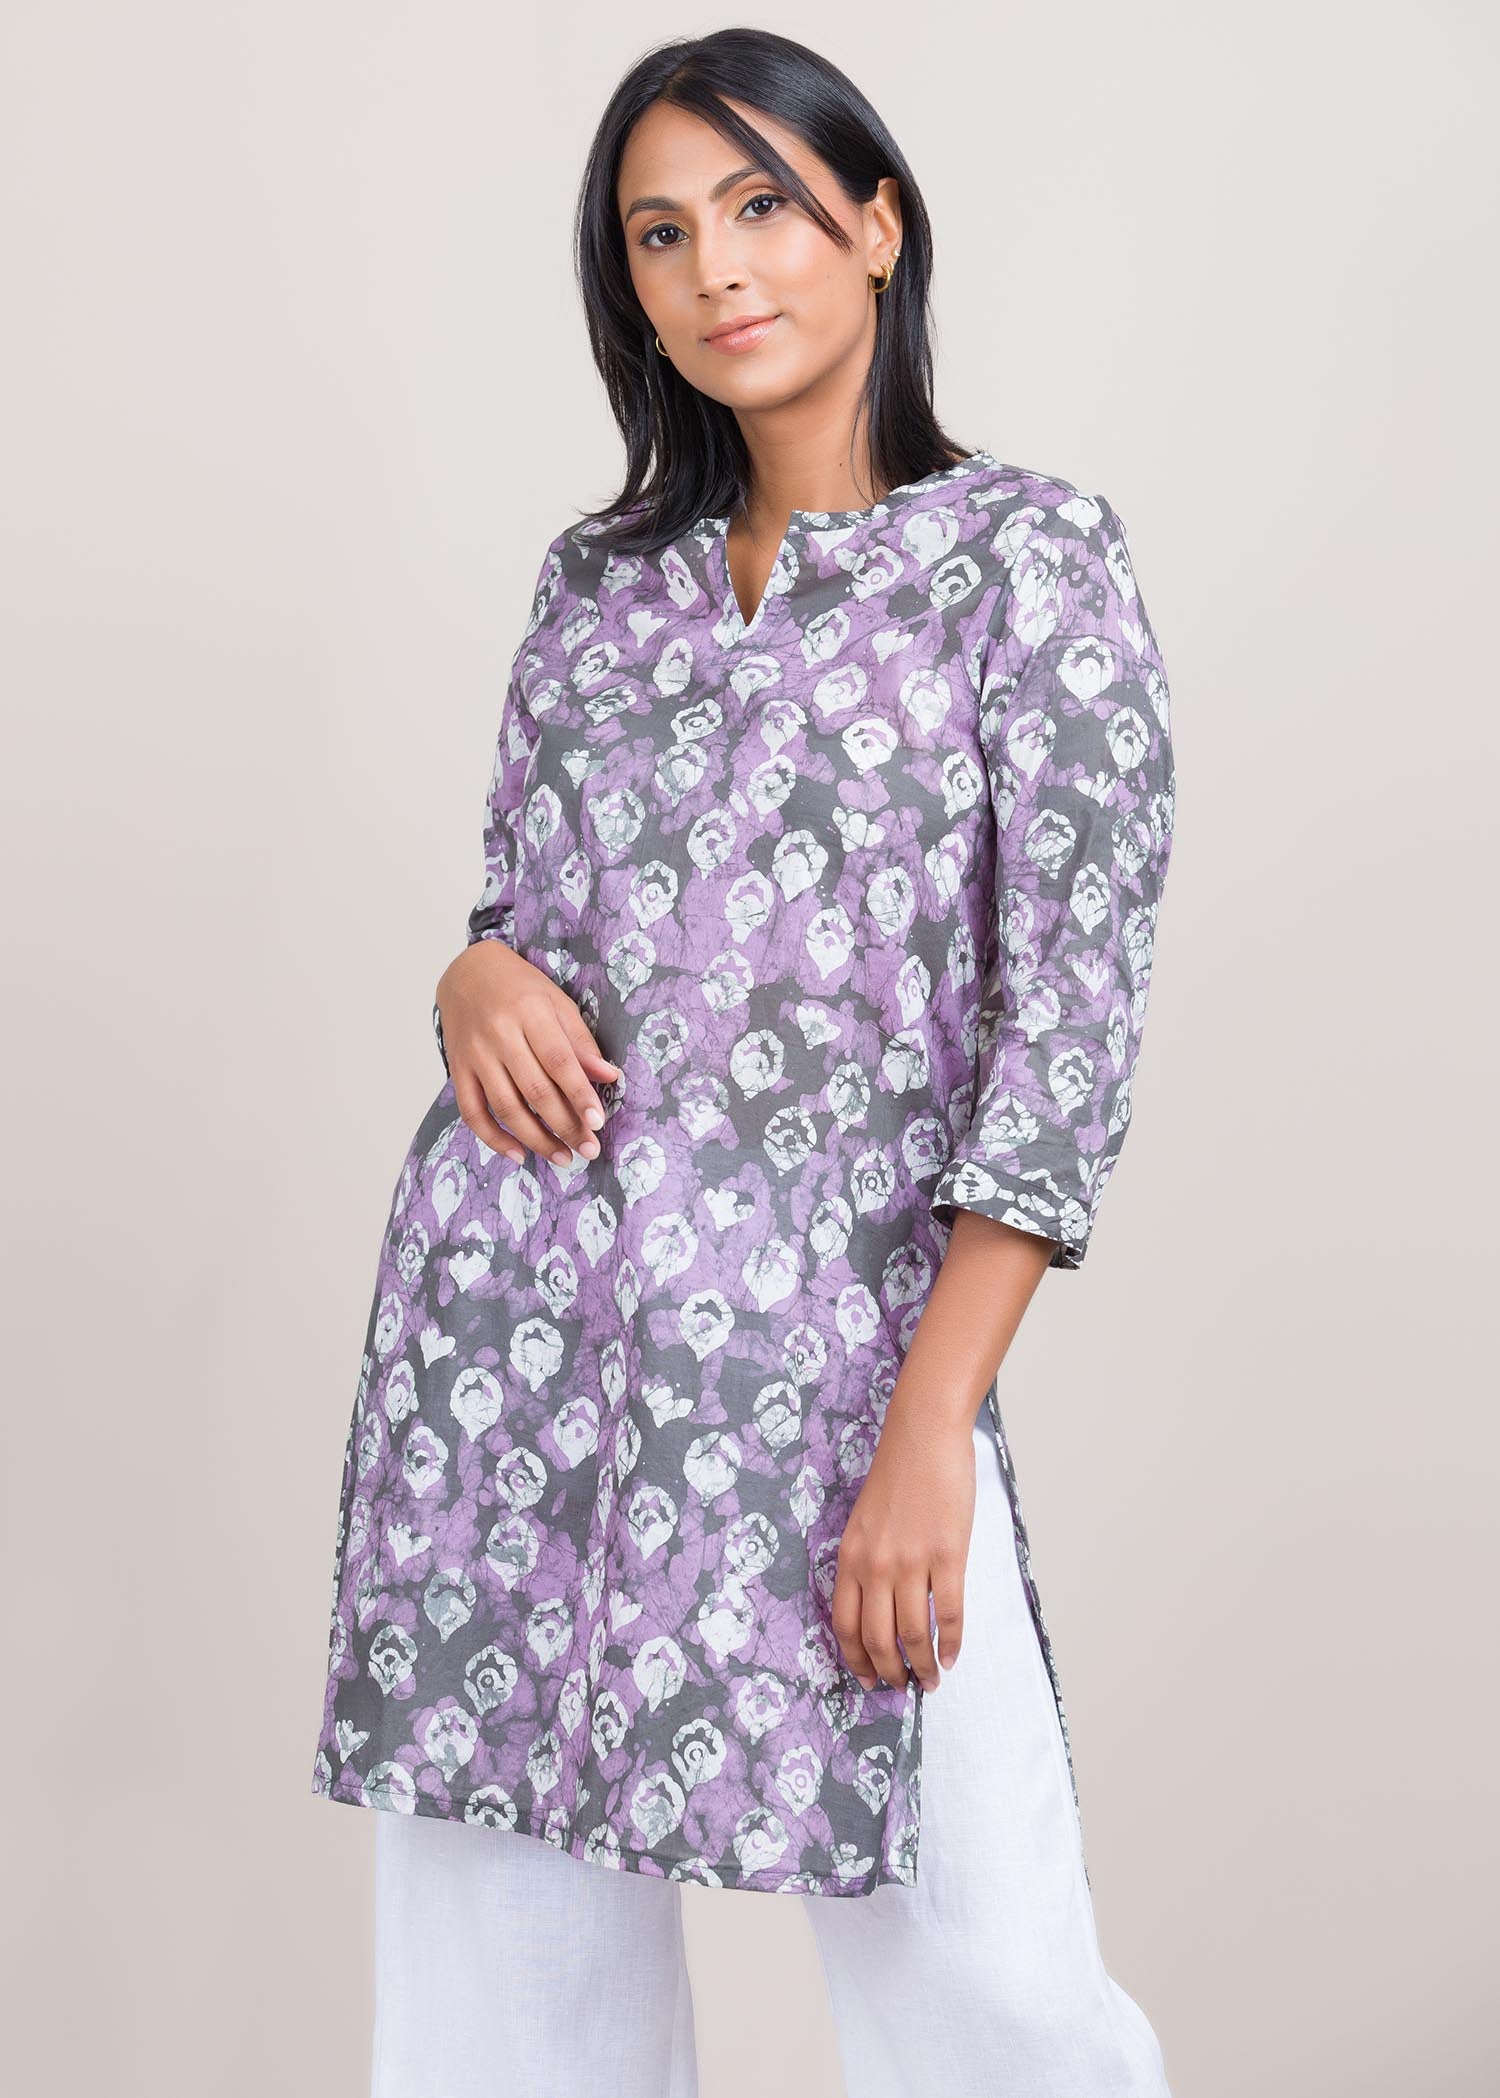 Batik printed kurtha top